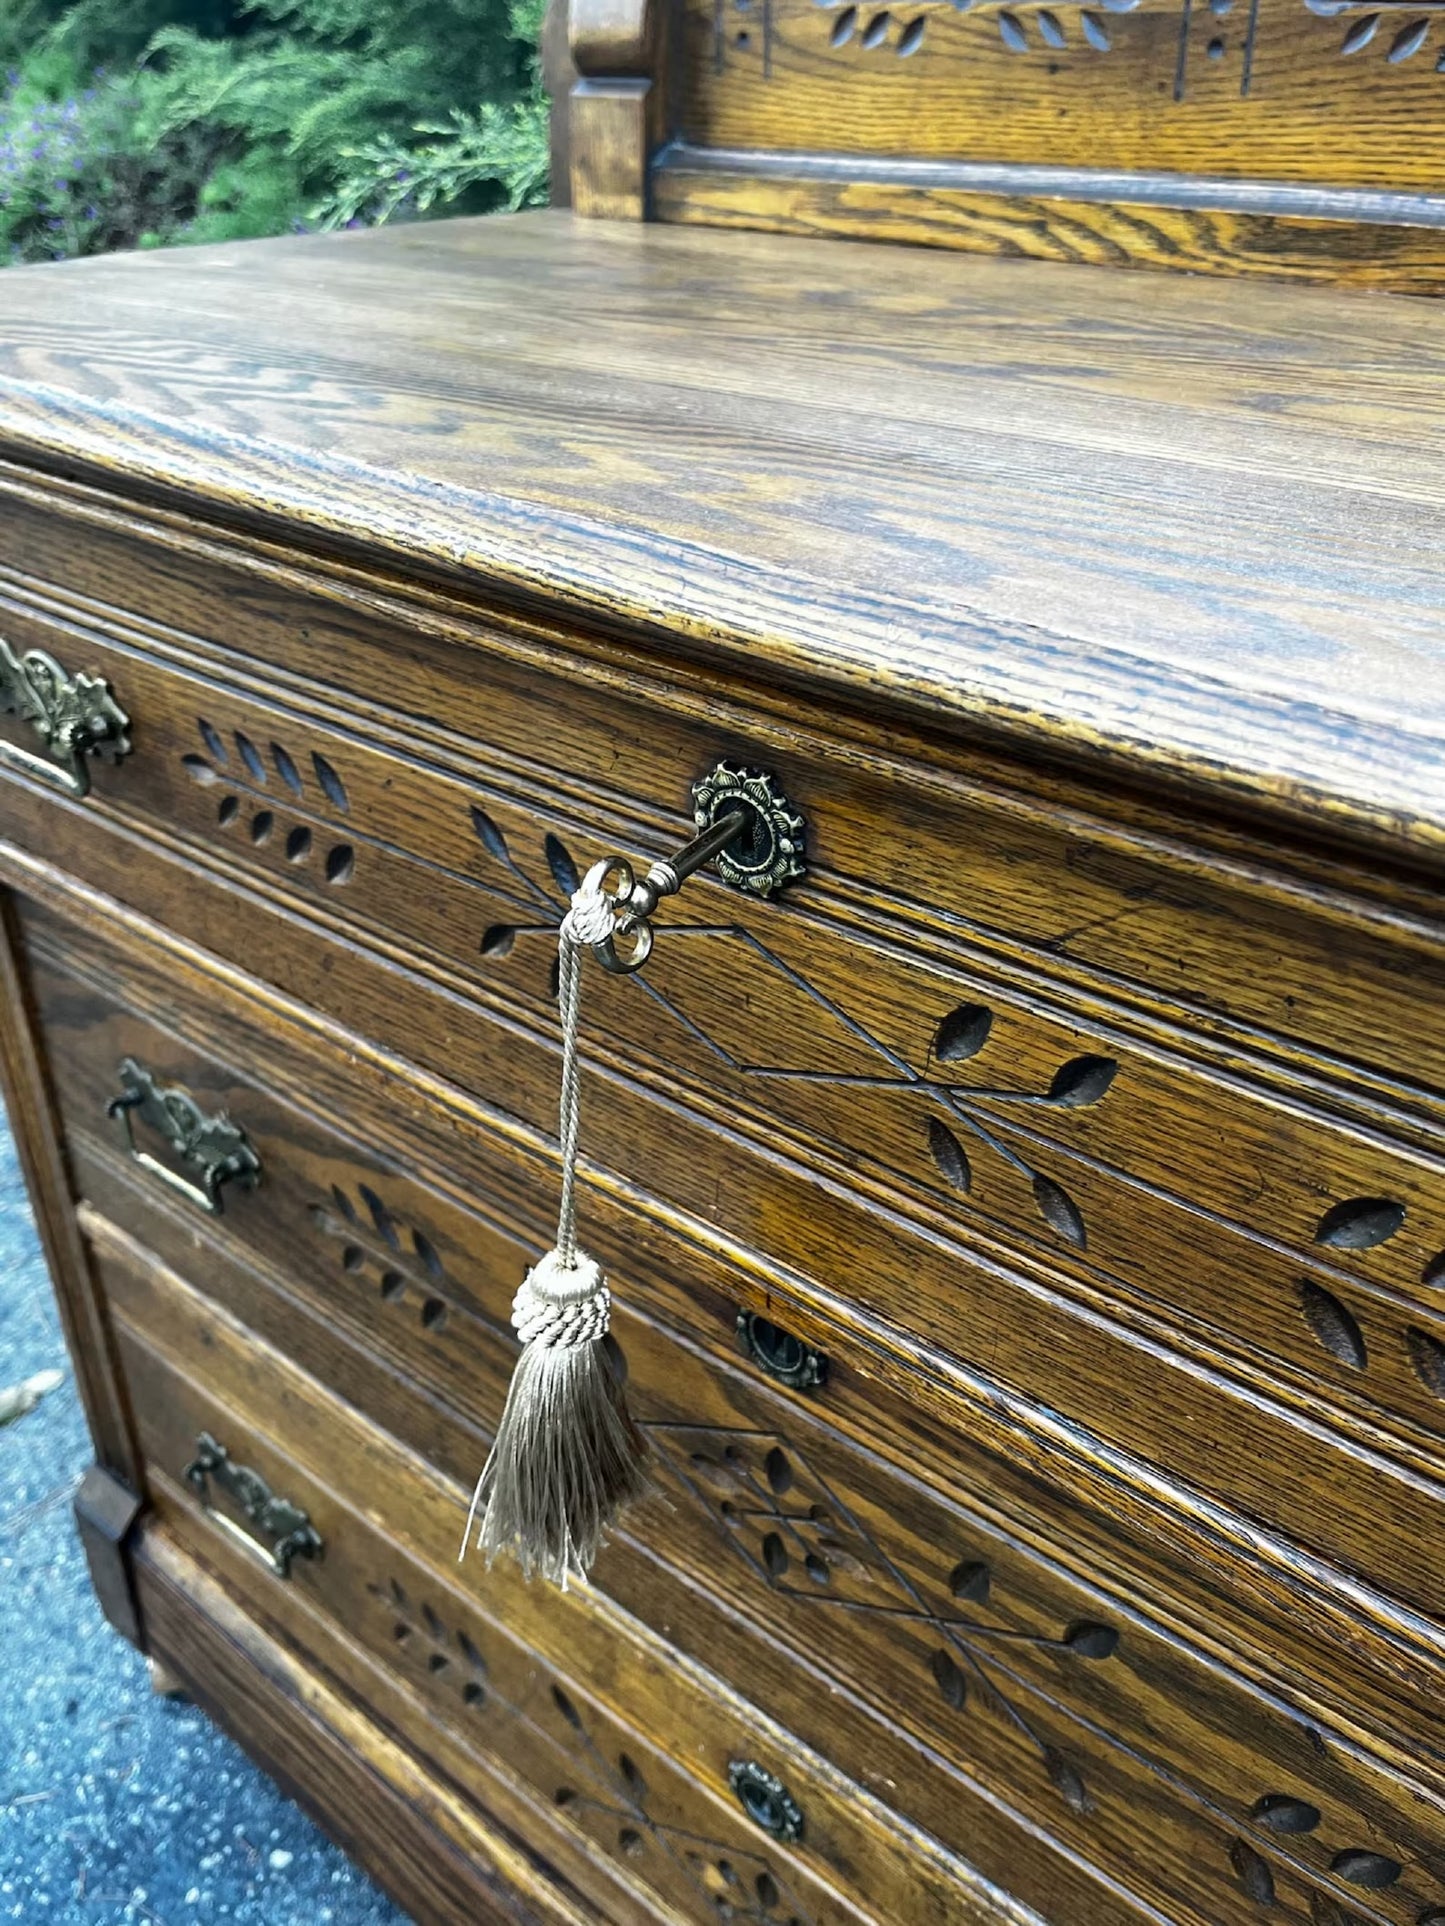 Antique Walnut Eastlake Dresser with tilting mirror and key lot# 93300